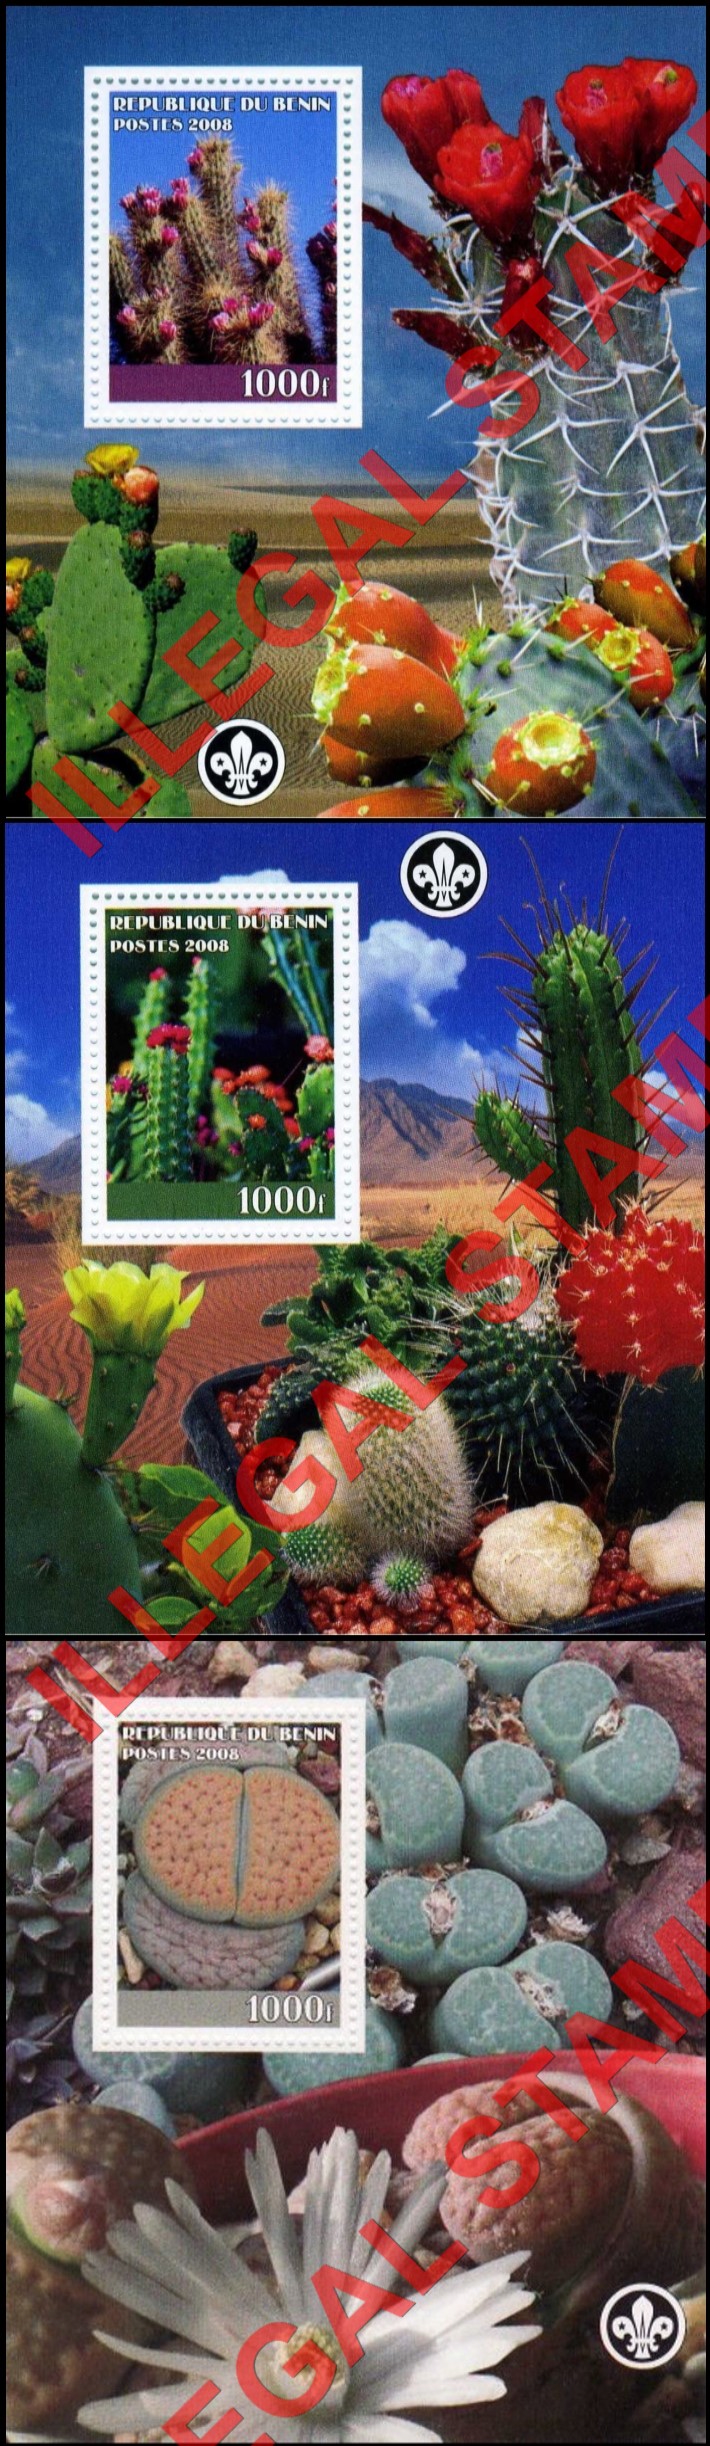 Benin 2008 Cactus Illegal Stamp Souvenir Sheets of 1